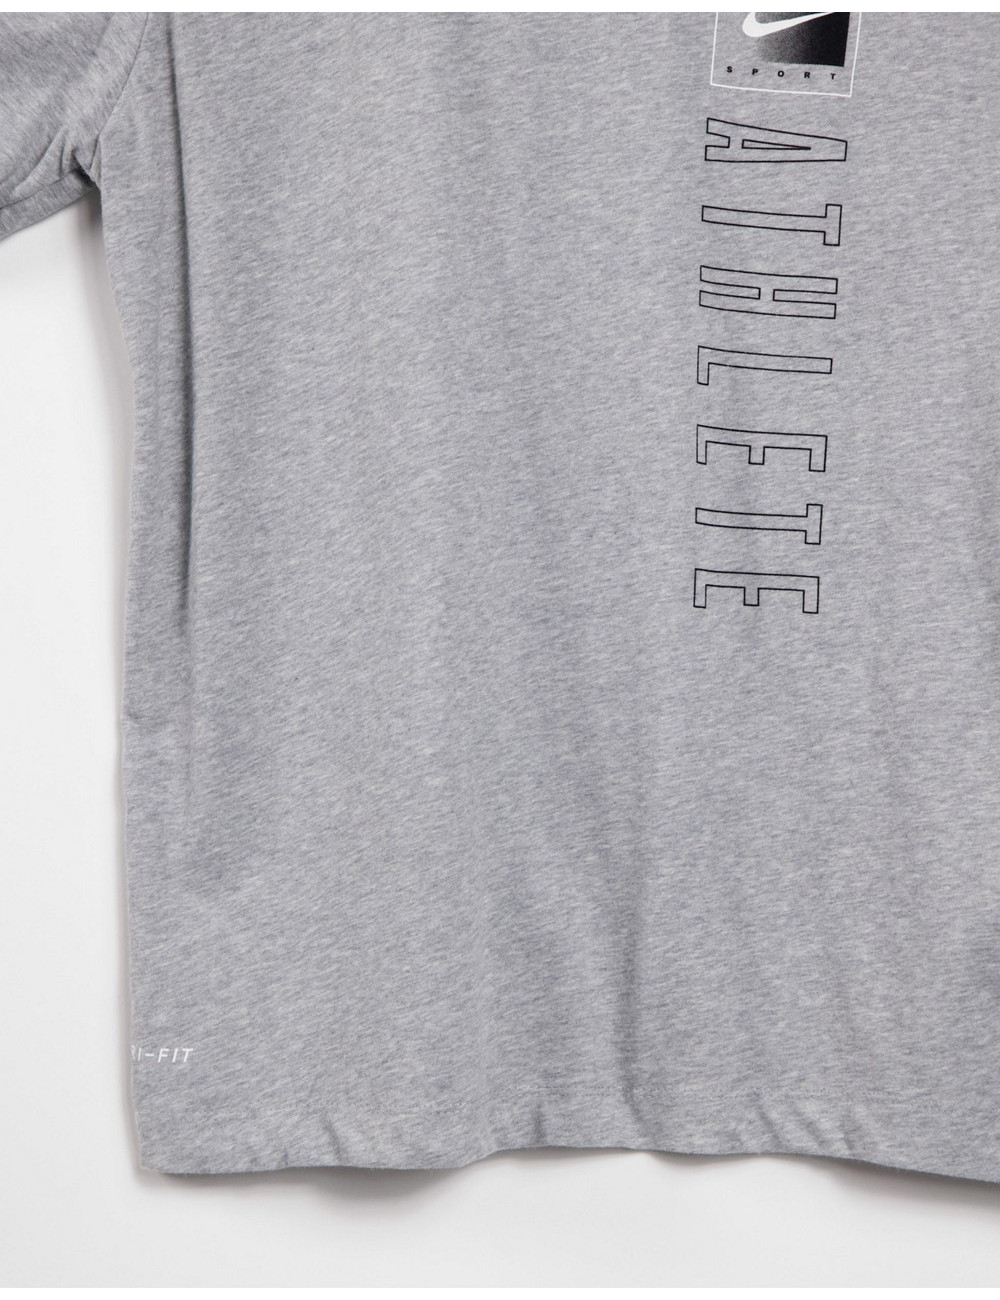 Nike Dri-FIT t-shirt in grey